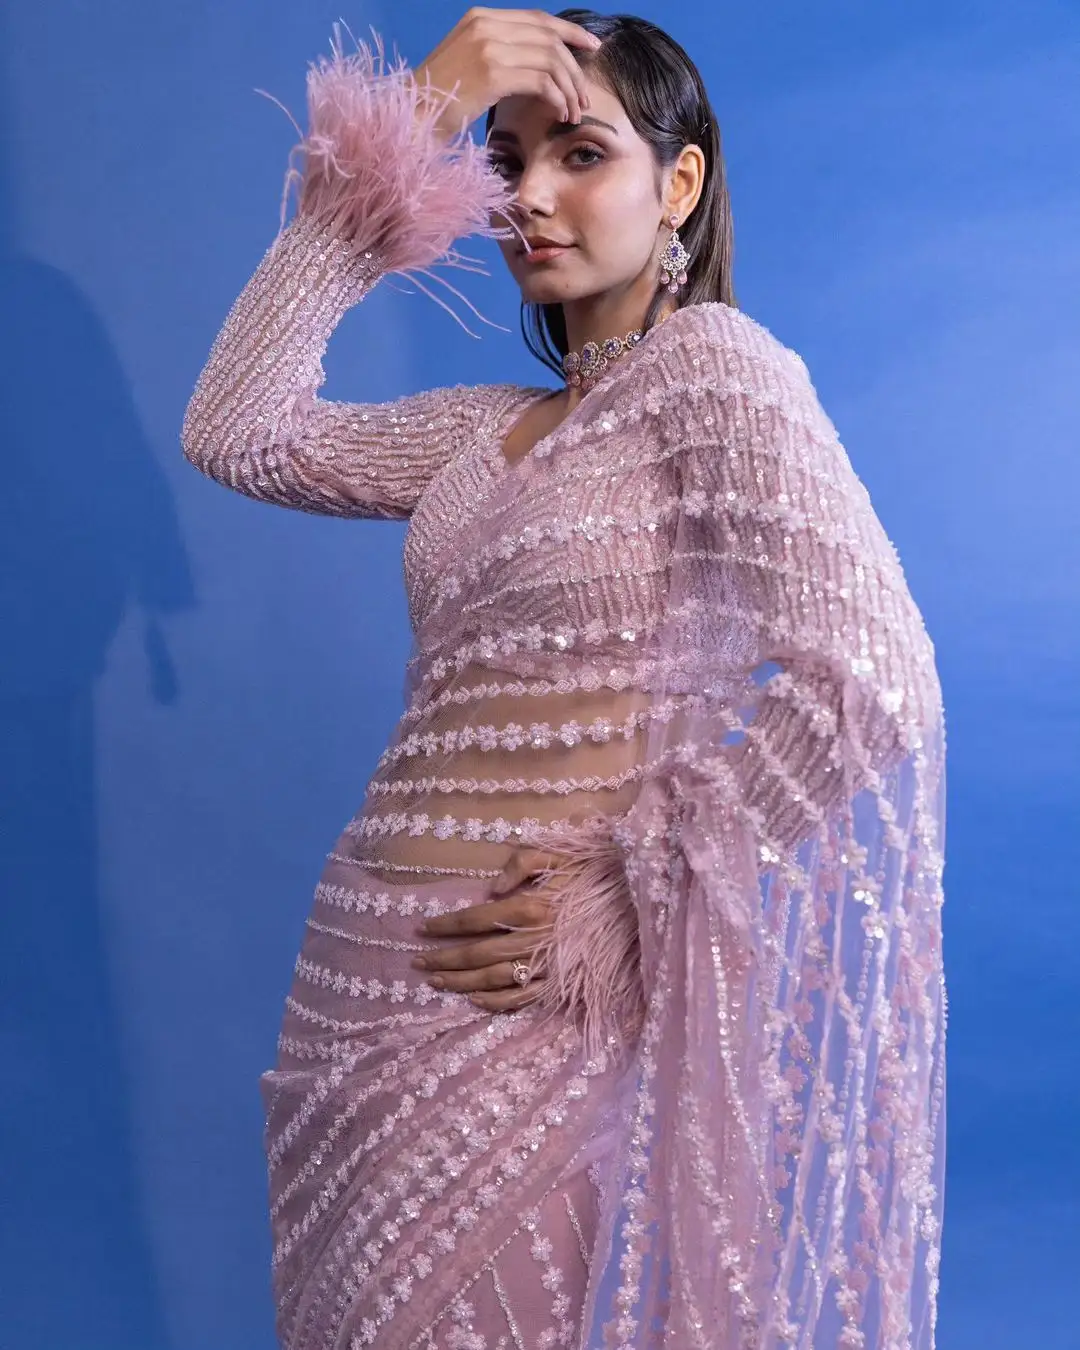 Bollywood-Stijl Feestkleding Sari Met Prachtige Pailletten Borduurwerk Van Fabzone India